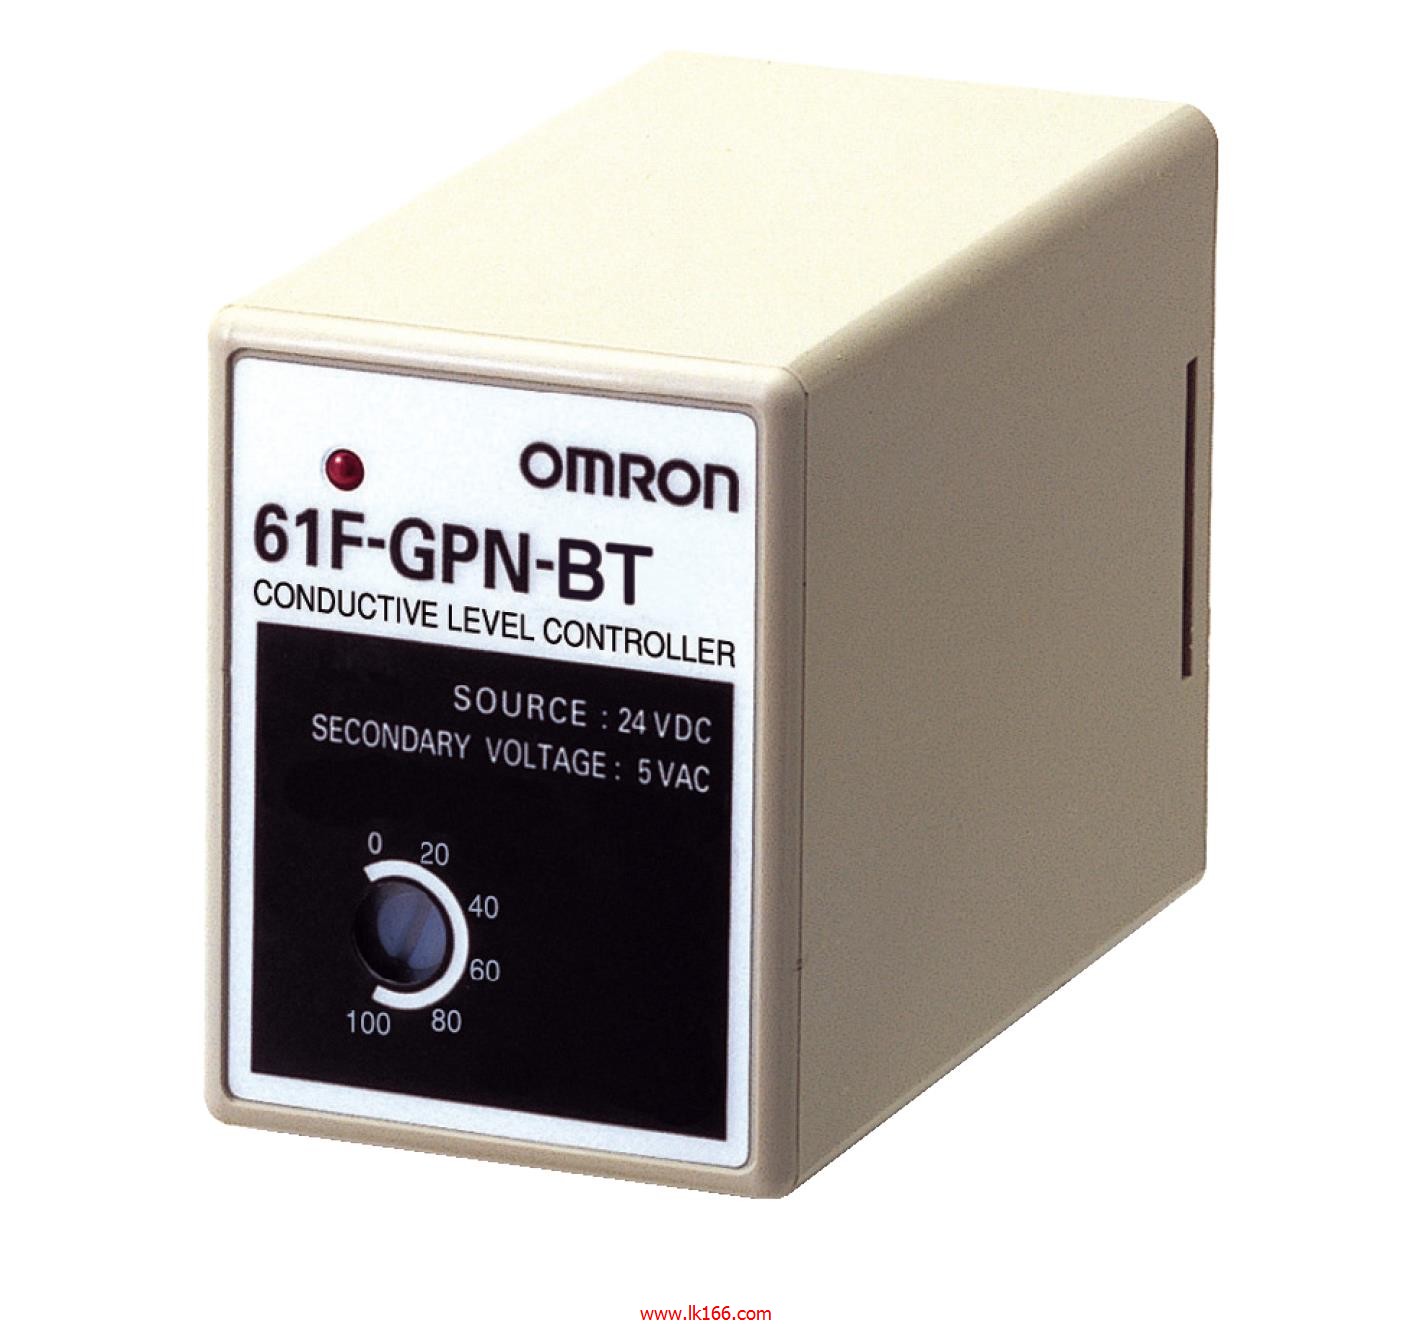 OMRON Conductive Level Controller 61F-GPN-BC